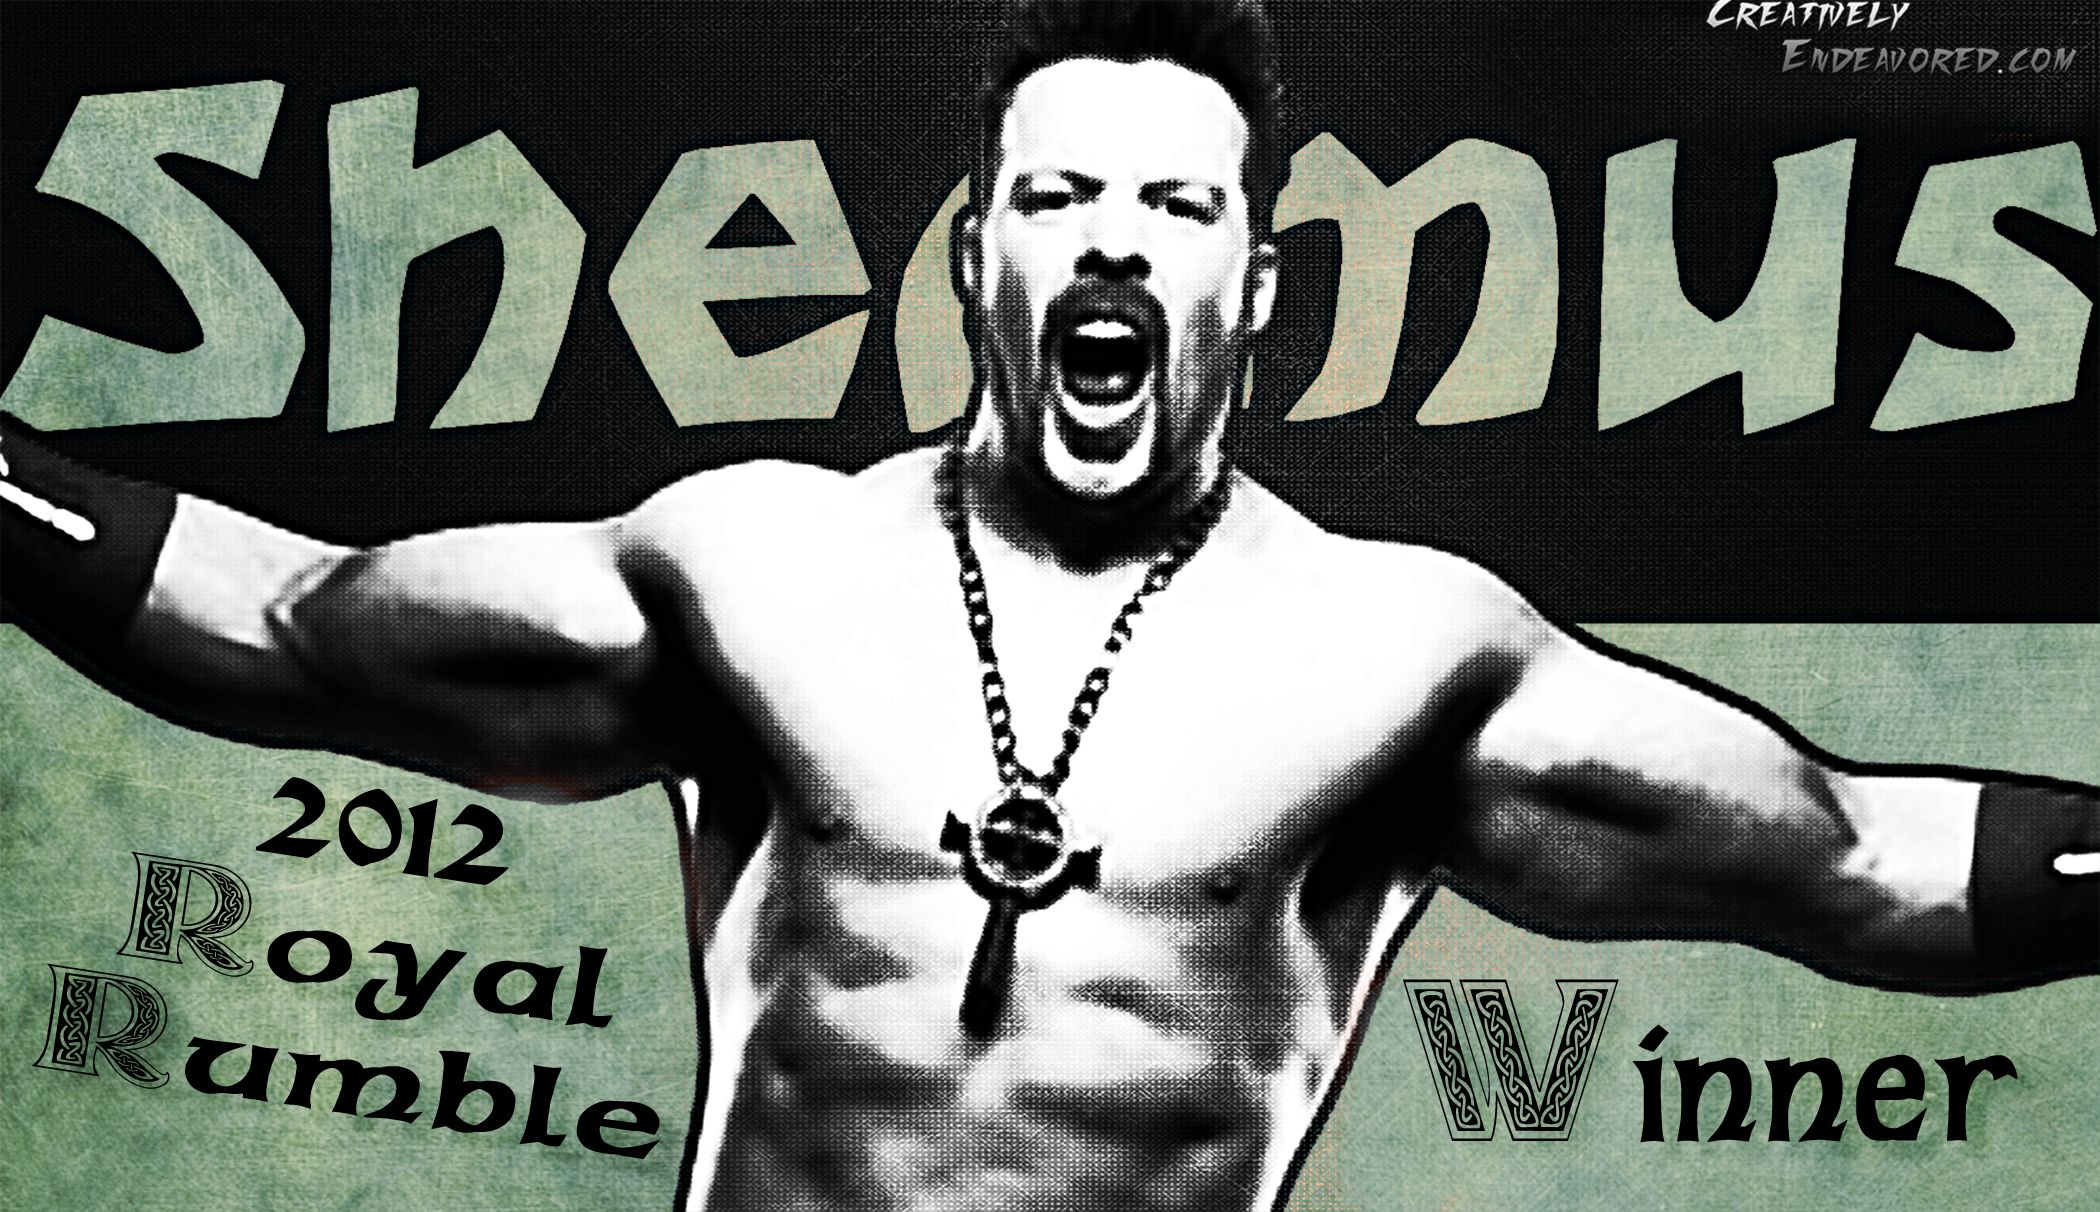 Wallpaper Wednesday: 2012 Royal Rumble Winner Sheamus